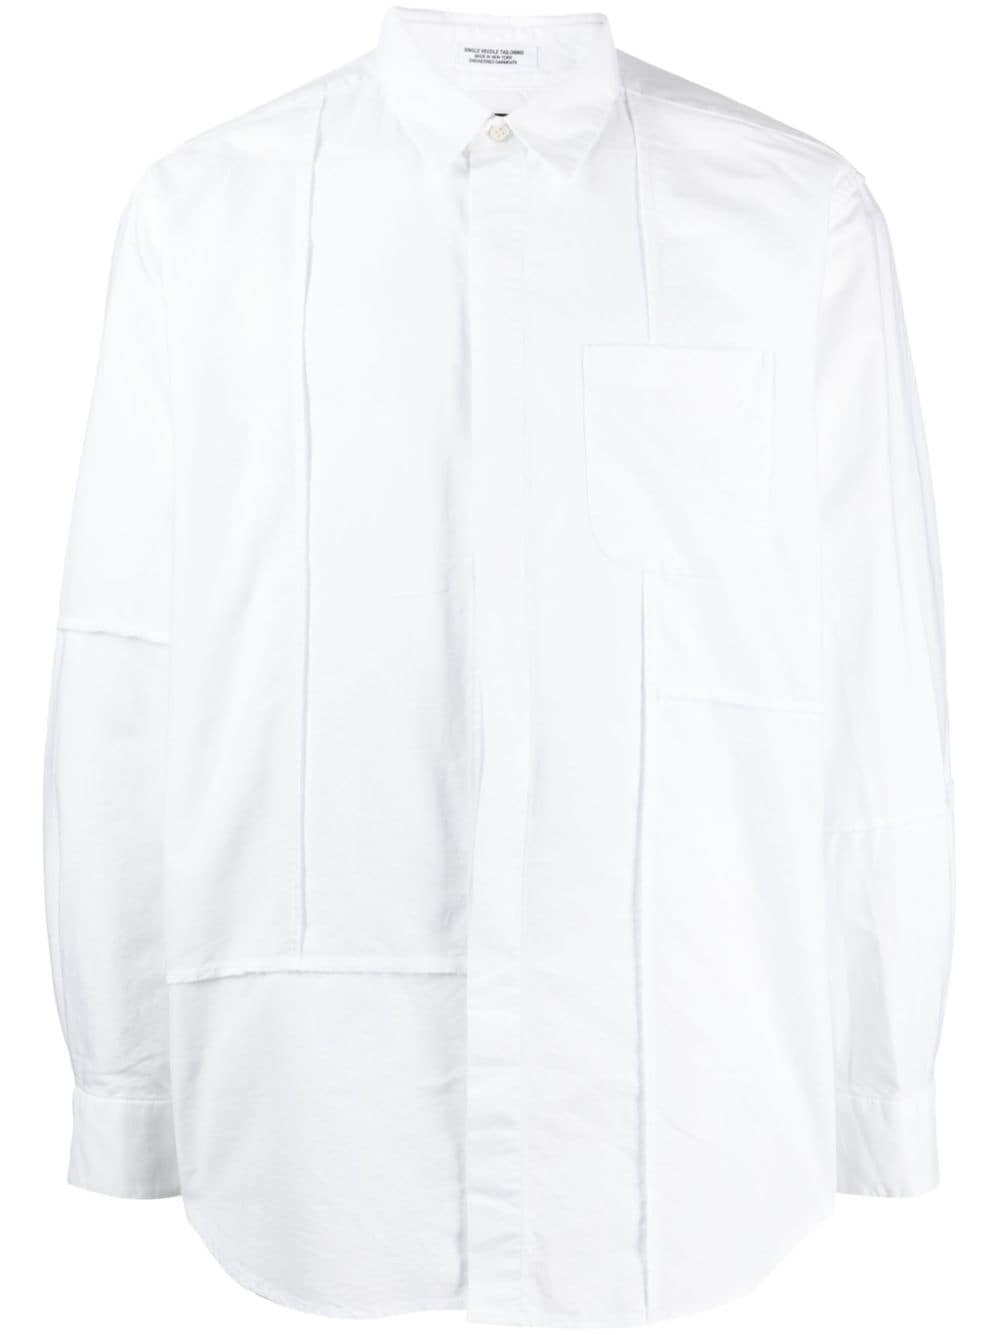 Combo cotton shirt - 1